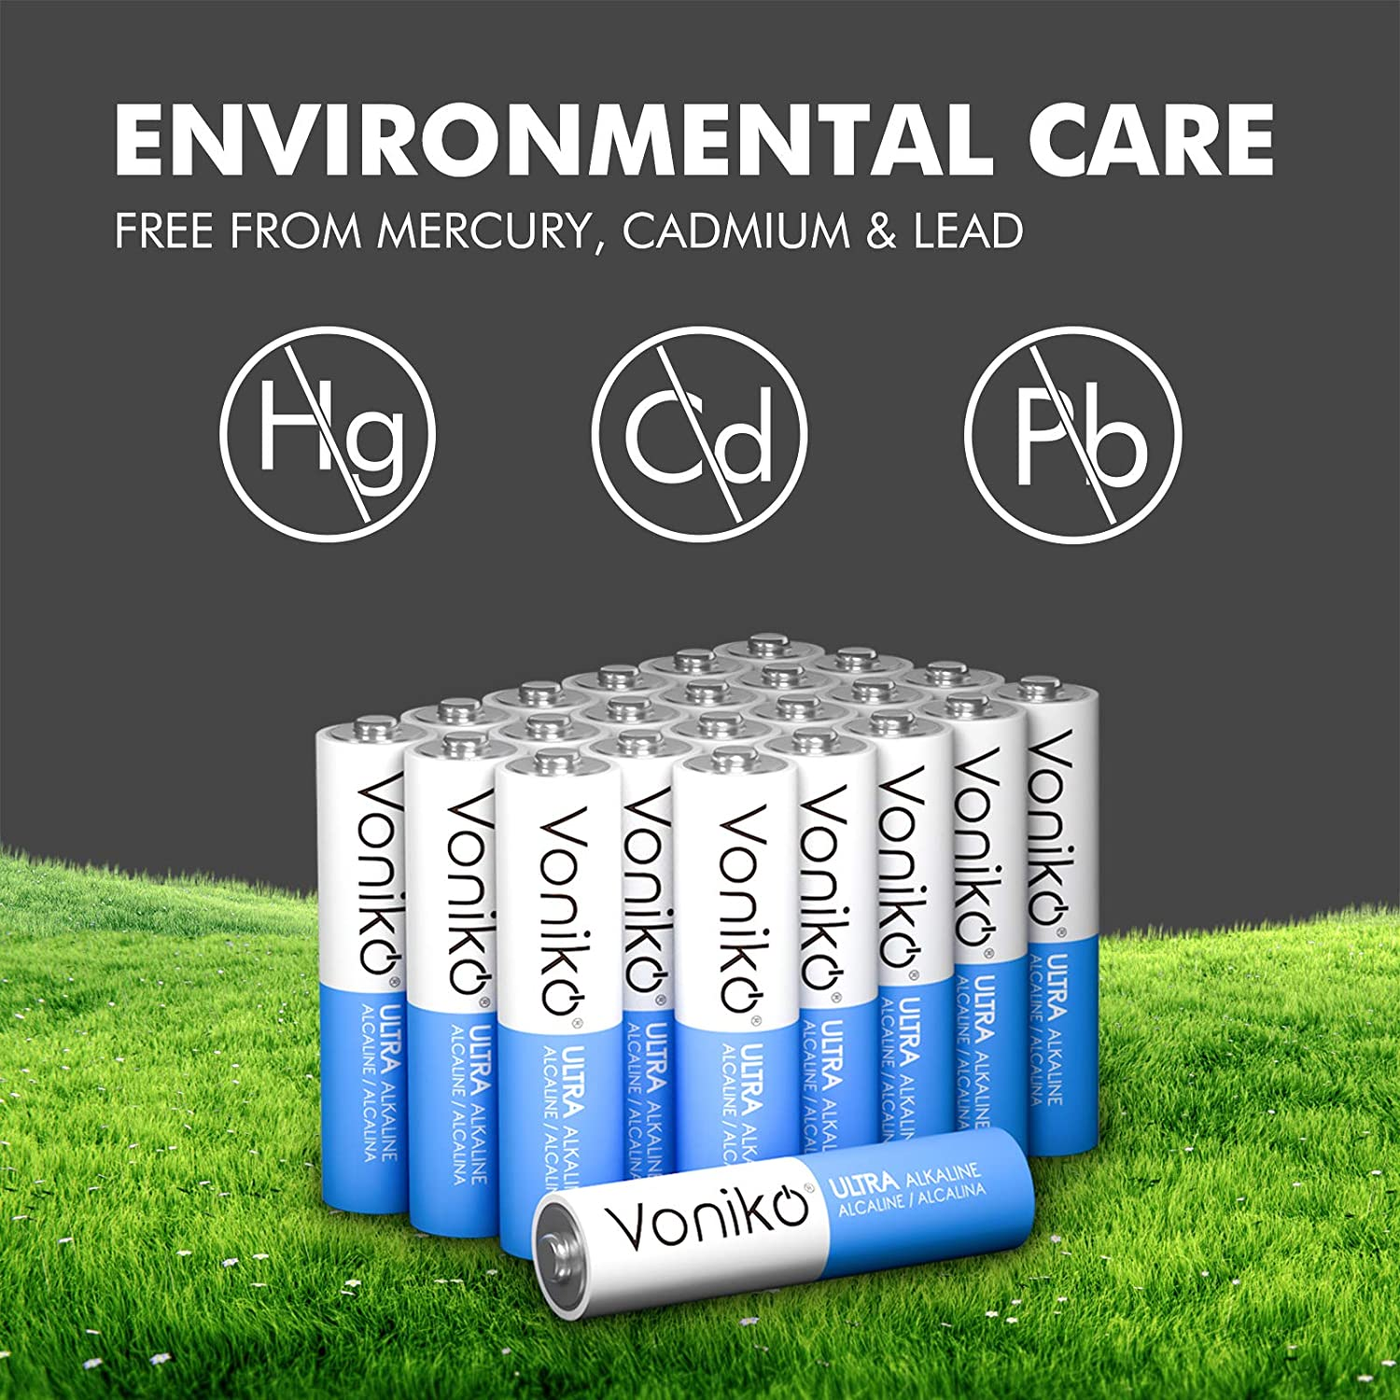 Premium Grade AAA Batteries - 24/48/100 Packs - Alkaline - Ultra Long-Lasting - 10-Year Shelf Life